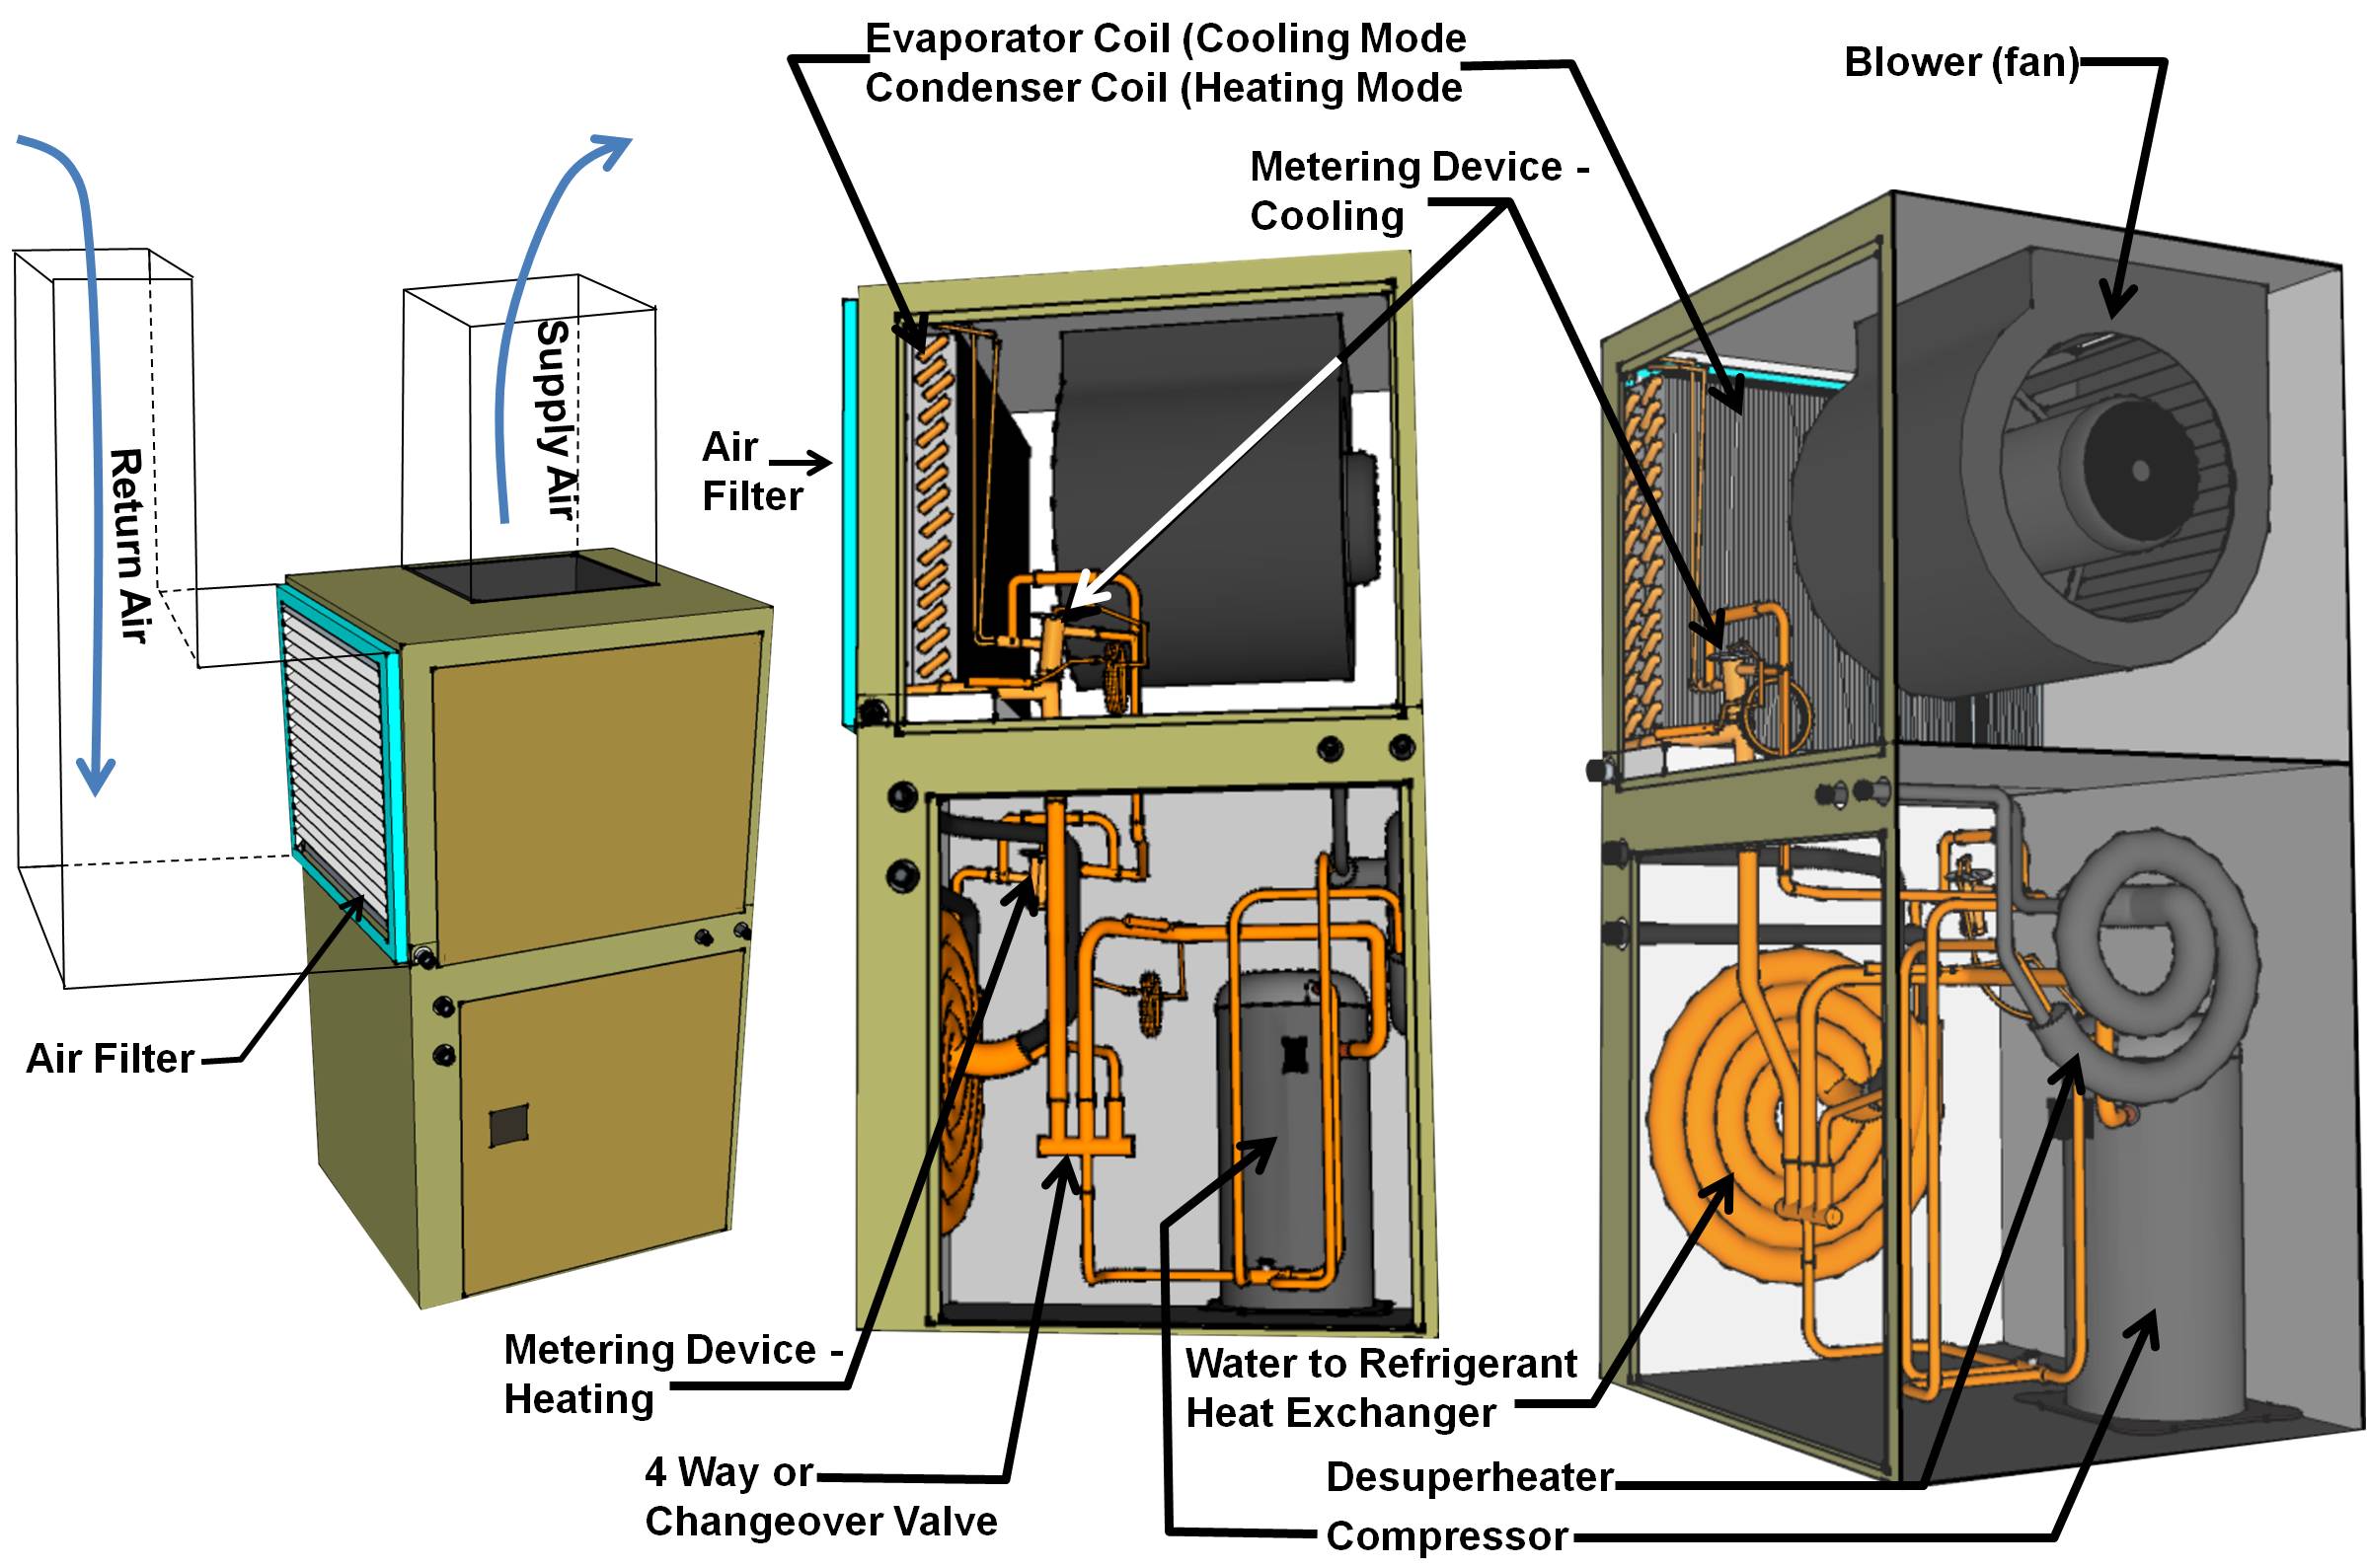 Ground-source heat pump components.